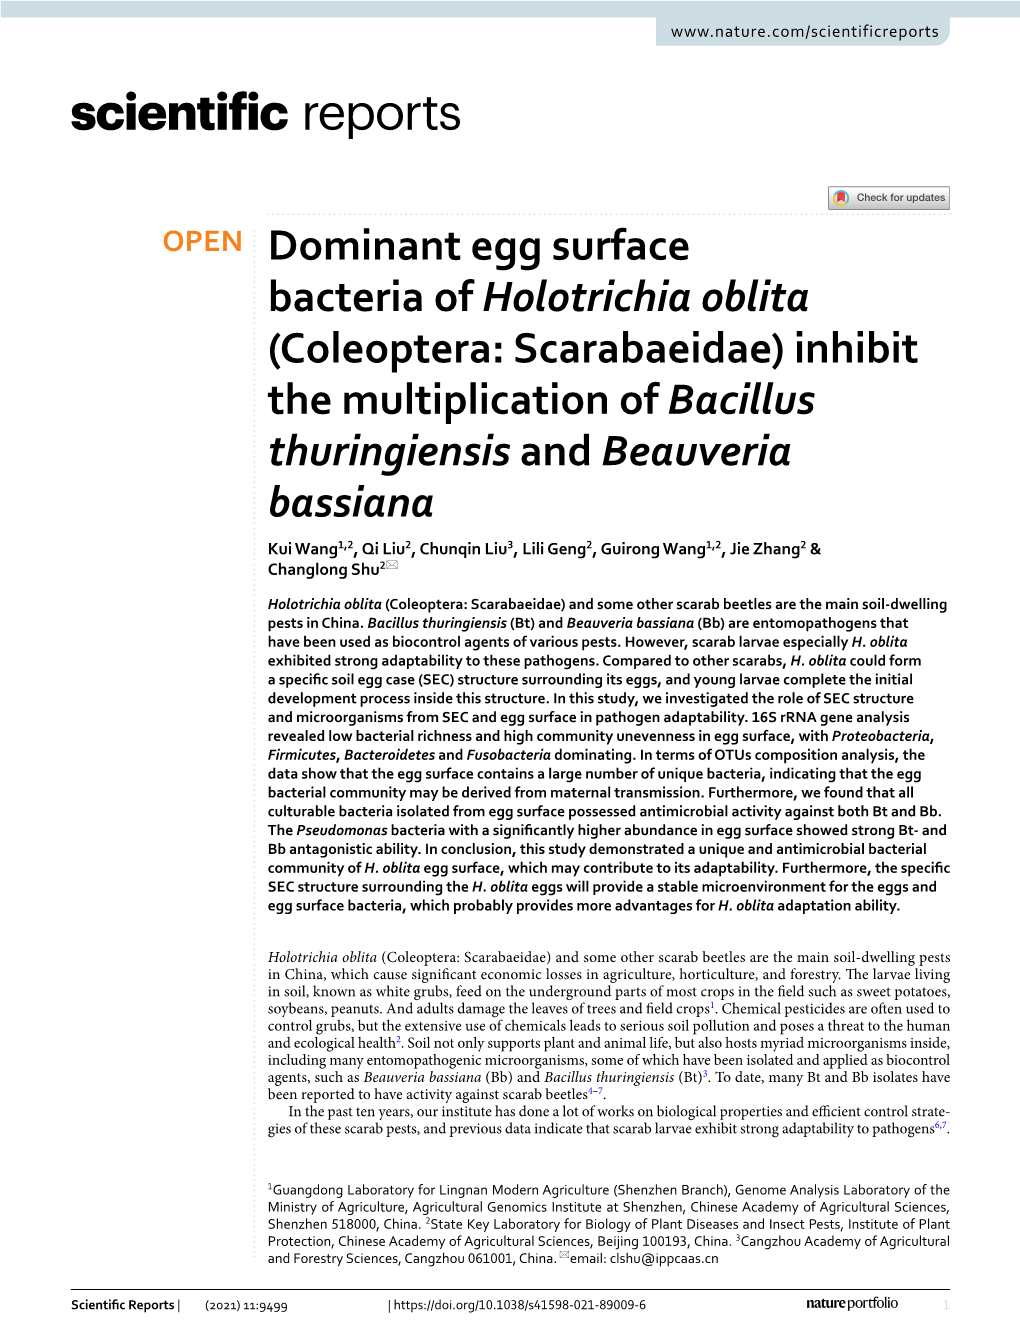 Dominant Egg Surface Bacteria of Holotrichia Oblita